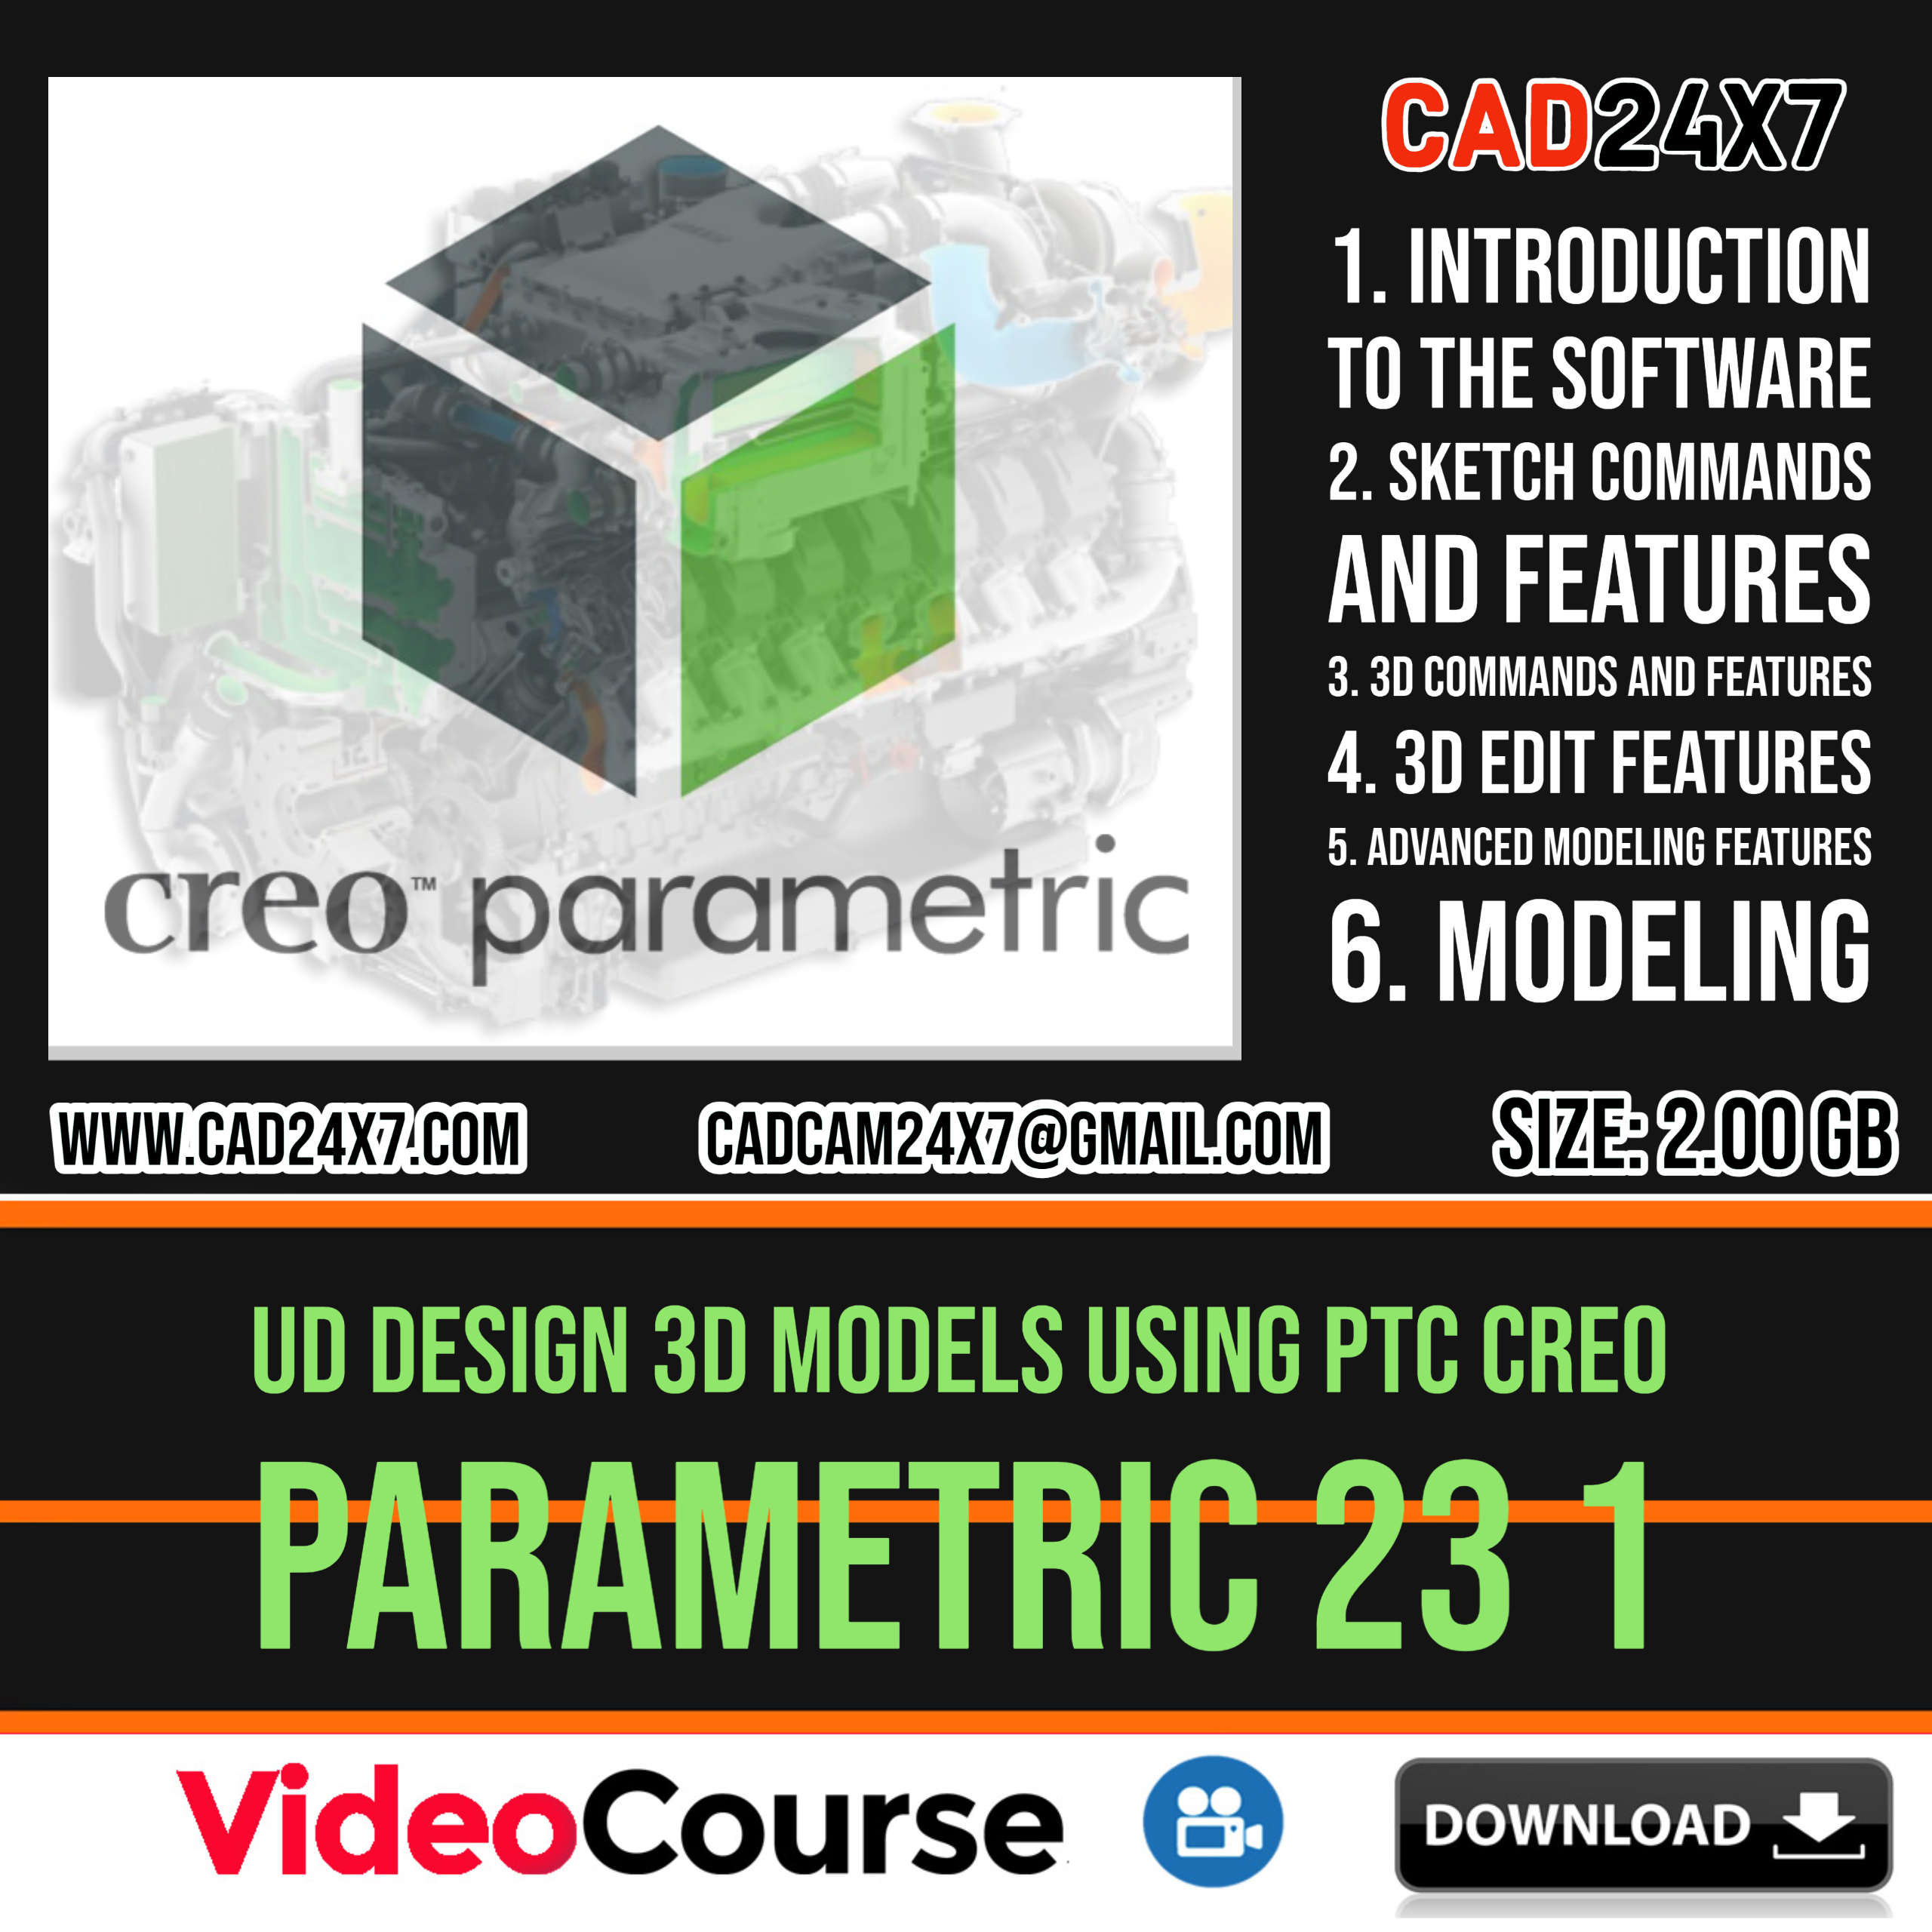 UD Design 3D models using PTC CREO Parametric 23 1